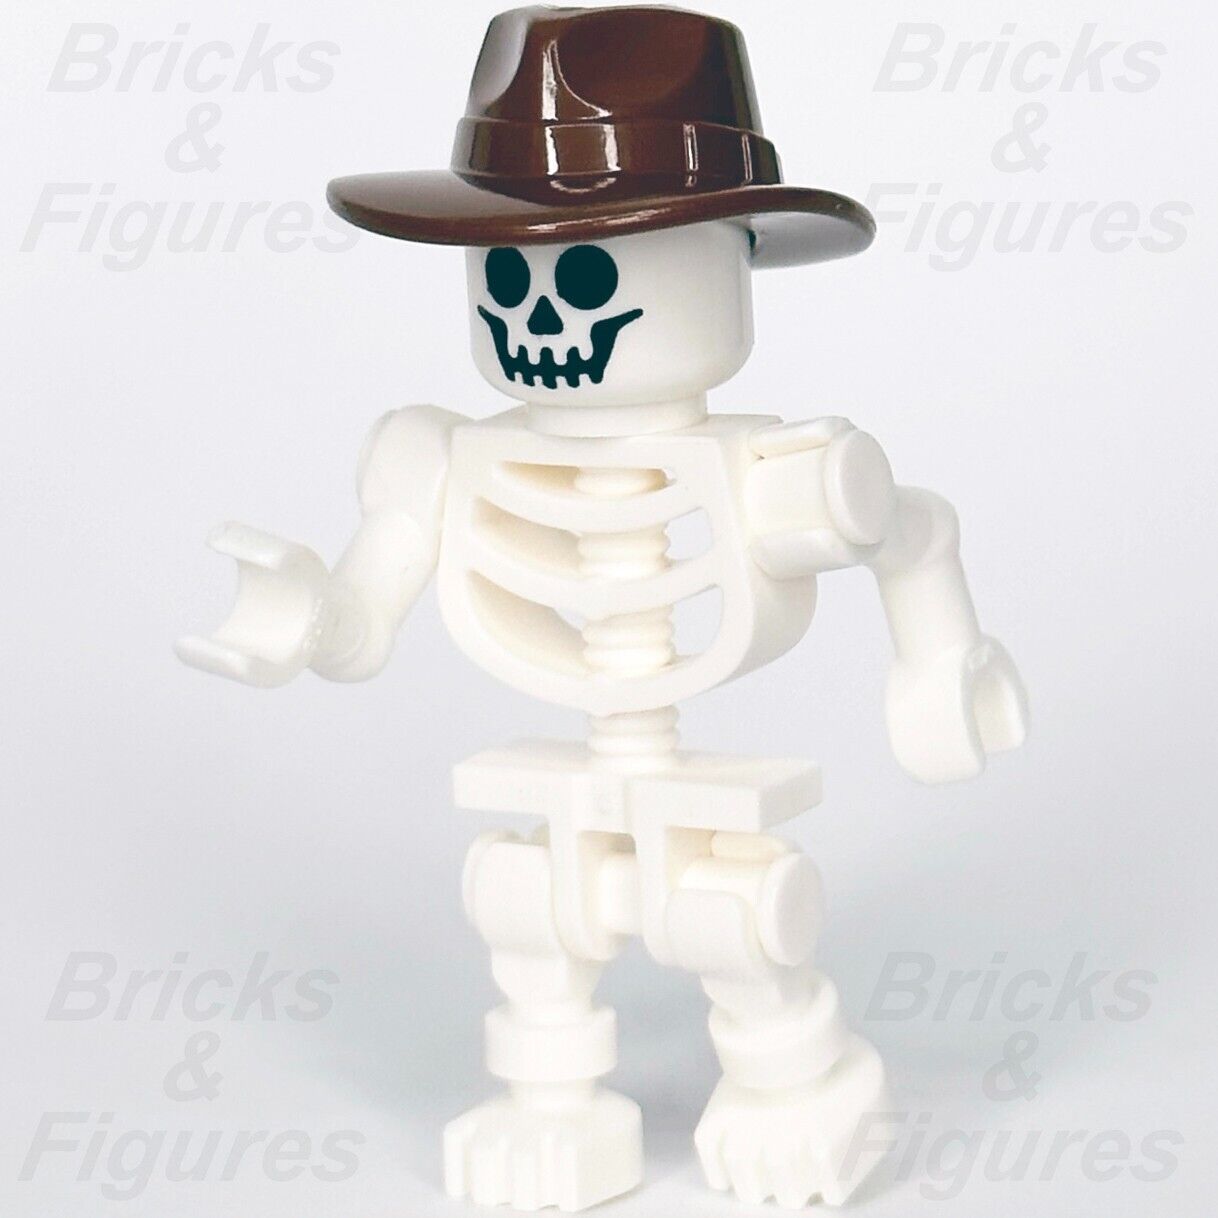 LEGO Ideas LEGO Sapiens Minifigure CUUSOO Skeleton Minifig 21320 idea064 w/ Hat 1